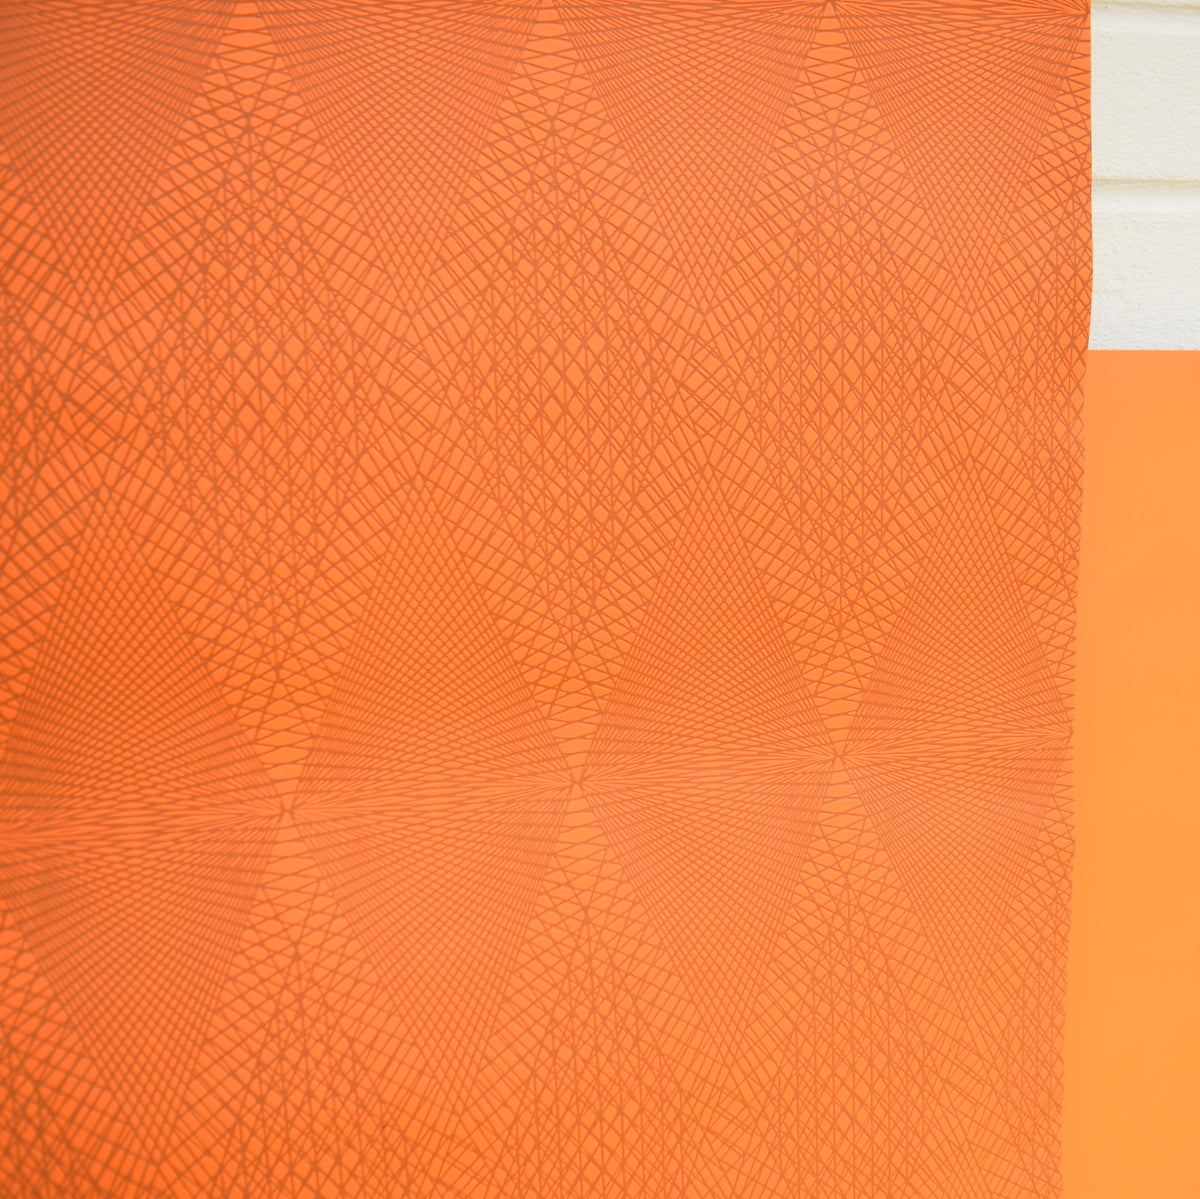 Vintage 1960s Vinyl Textured Wallpaper - Orange Geometric / Op Art